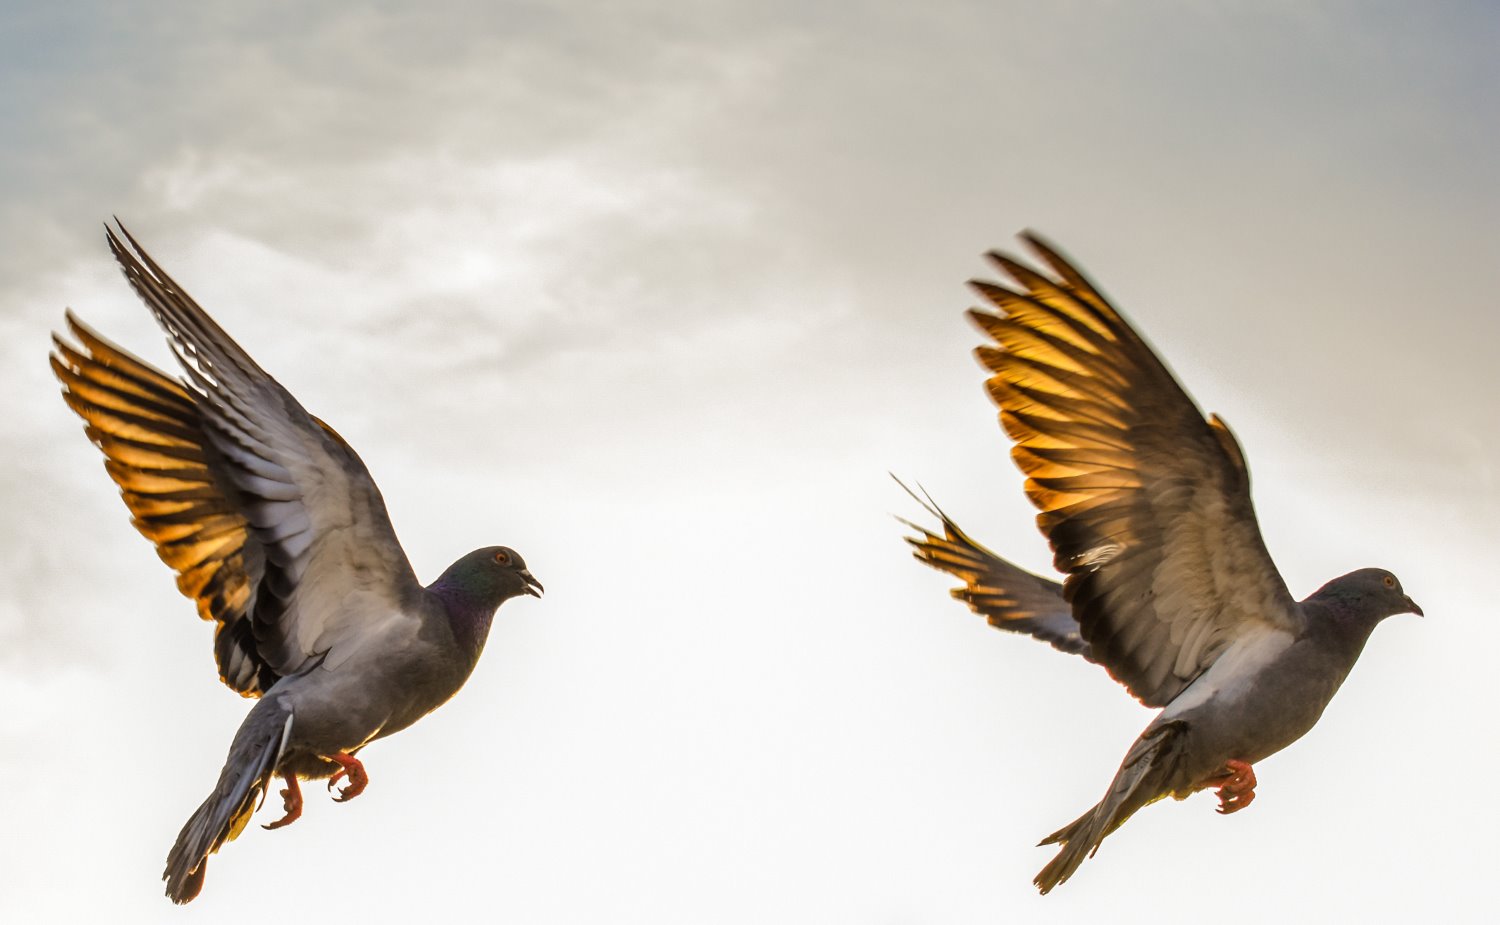 Birds in flight photography